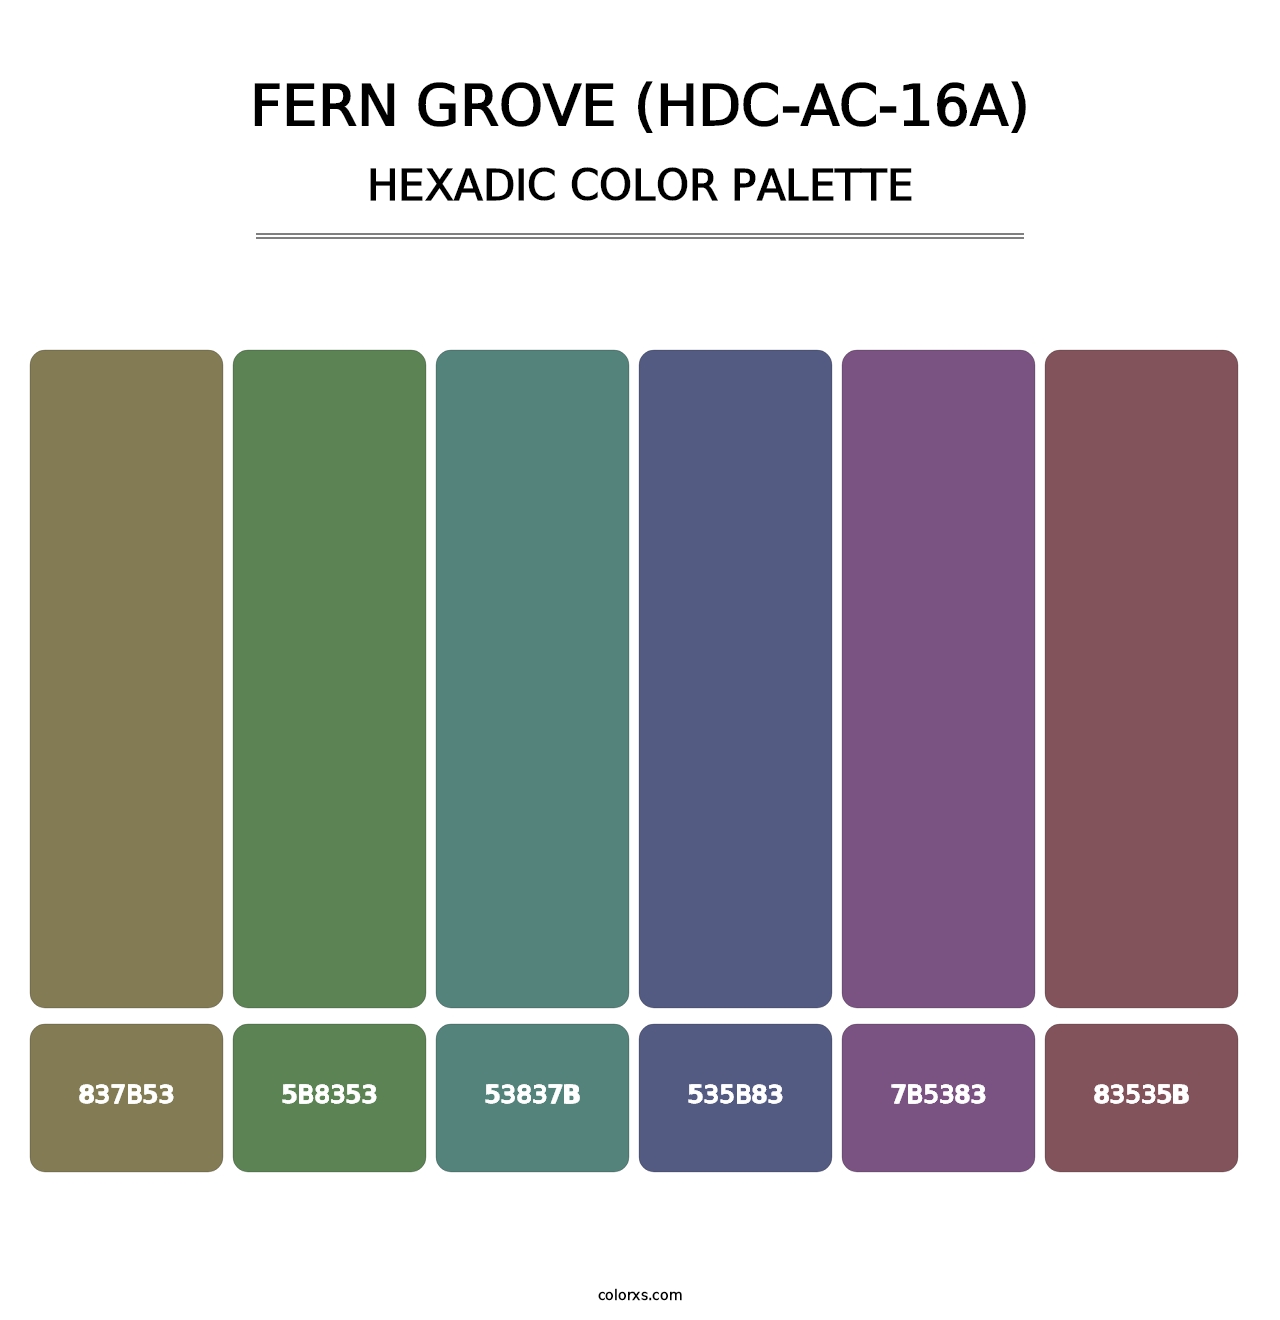 Fern Grove (HDC-AC-16A) - Hexadic Color Palette